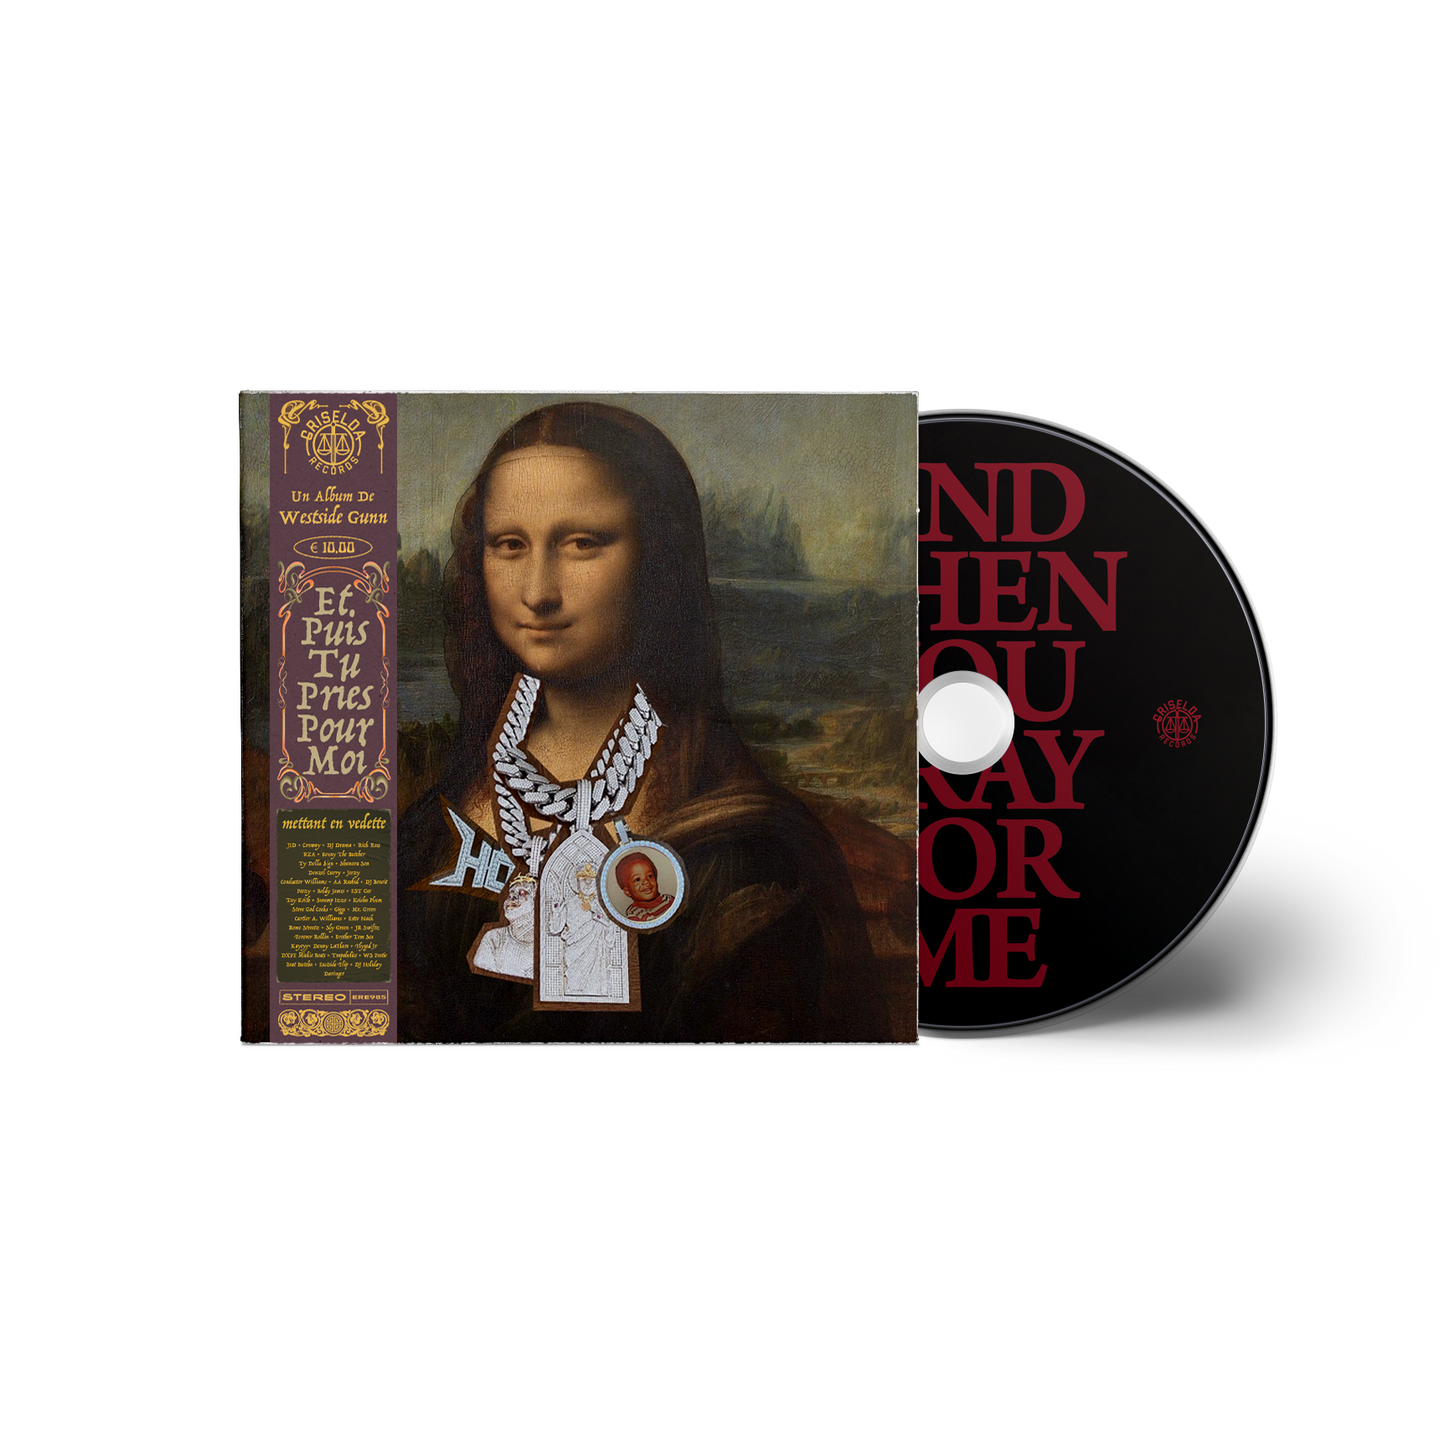 Westside Gunn - AND THEN YOU PRAY FOR ME CD - Mona Lisa Cover